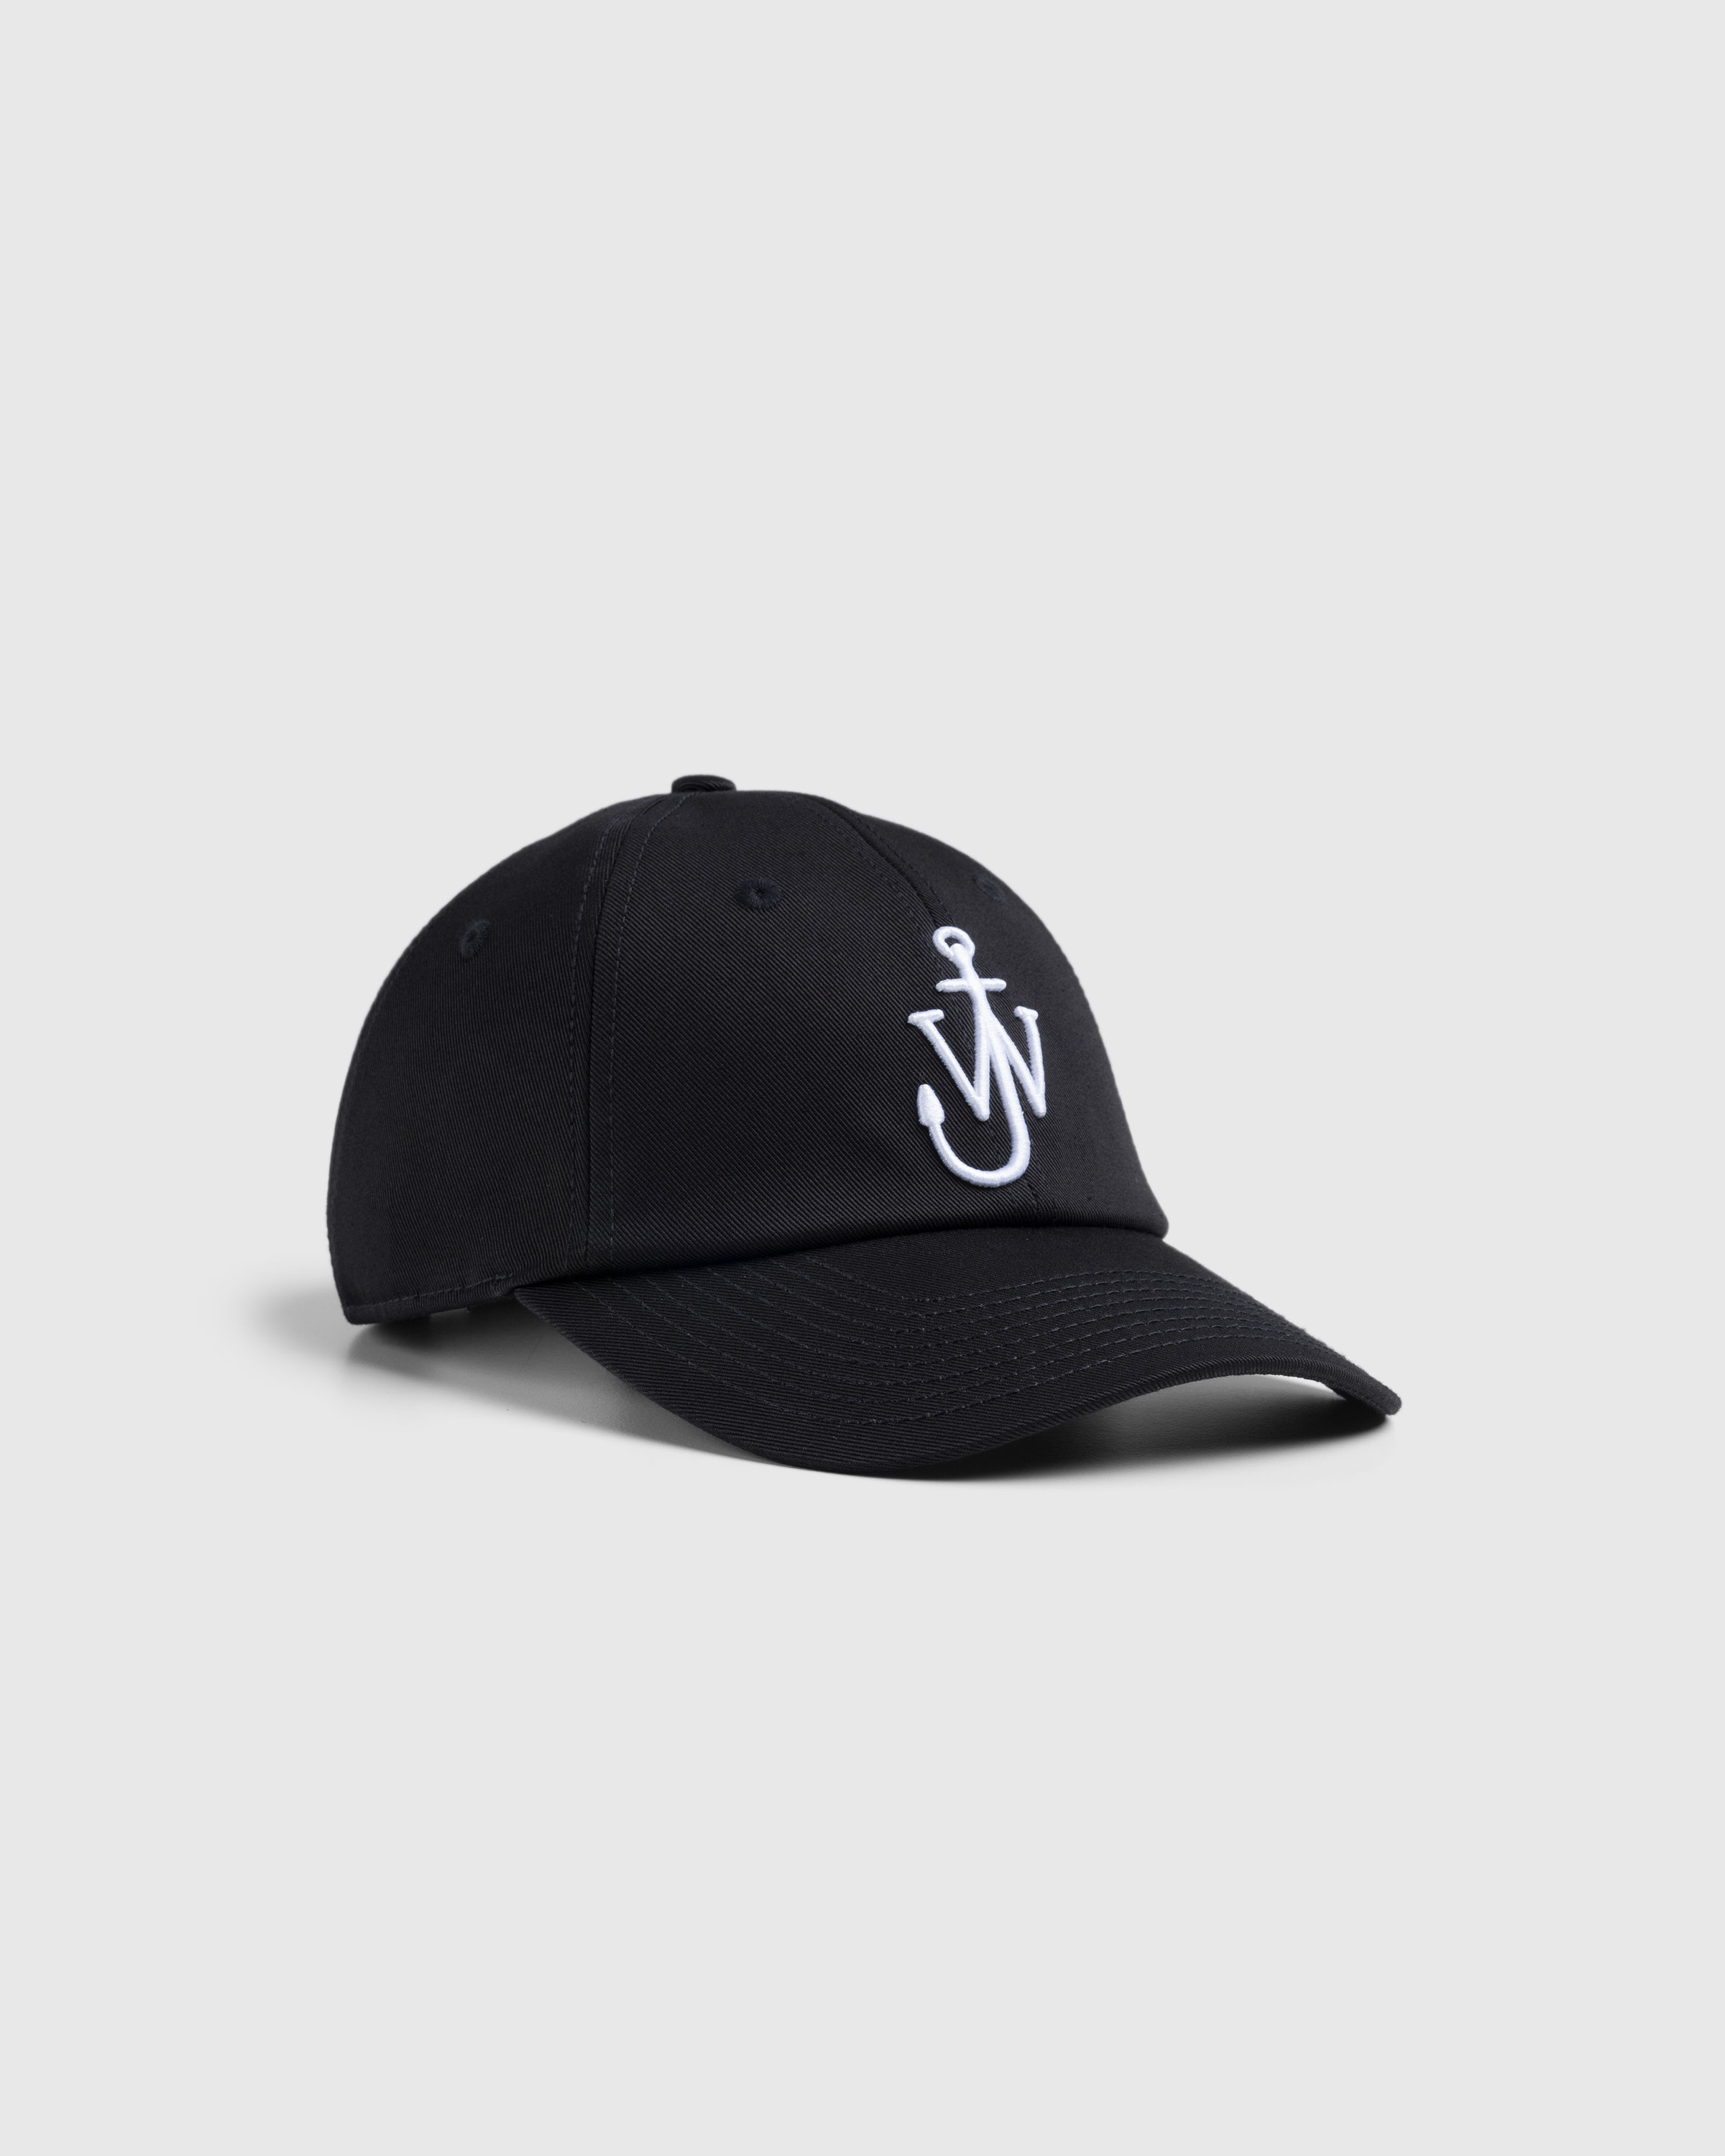 J.W. Anderson – Anchor Logo Baseball Cap Black - Hats - Black - Image 1